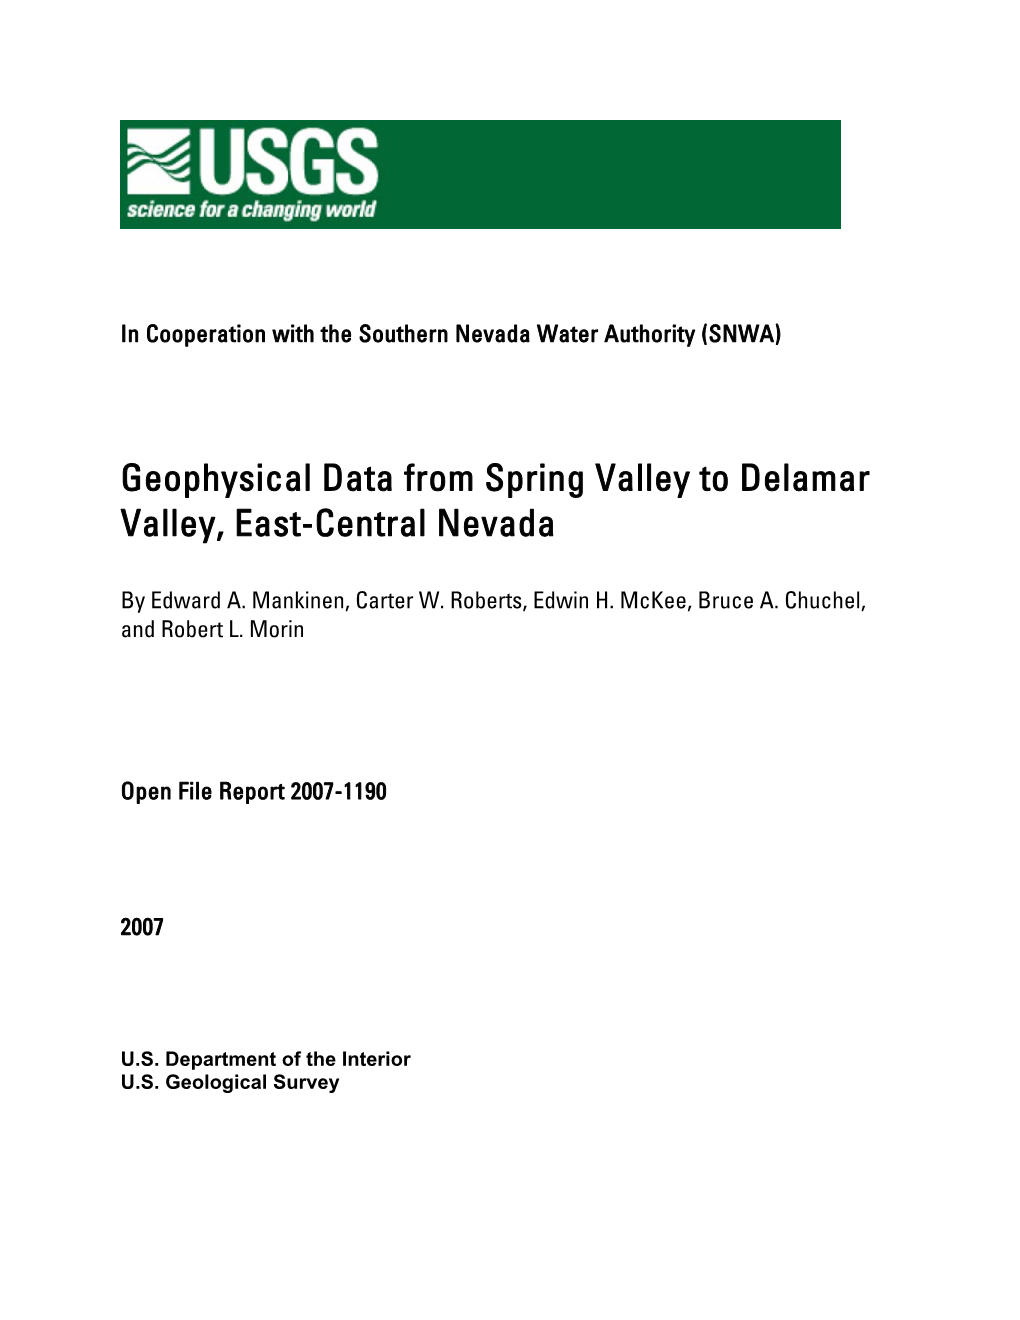 USGS Open File Report 2007–1190